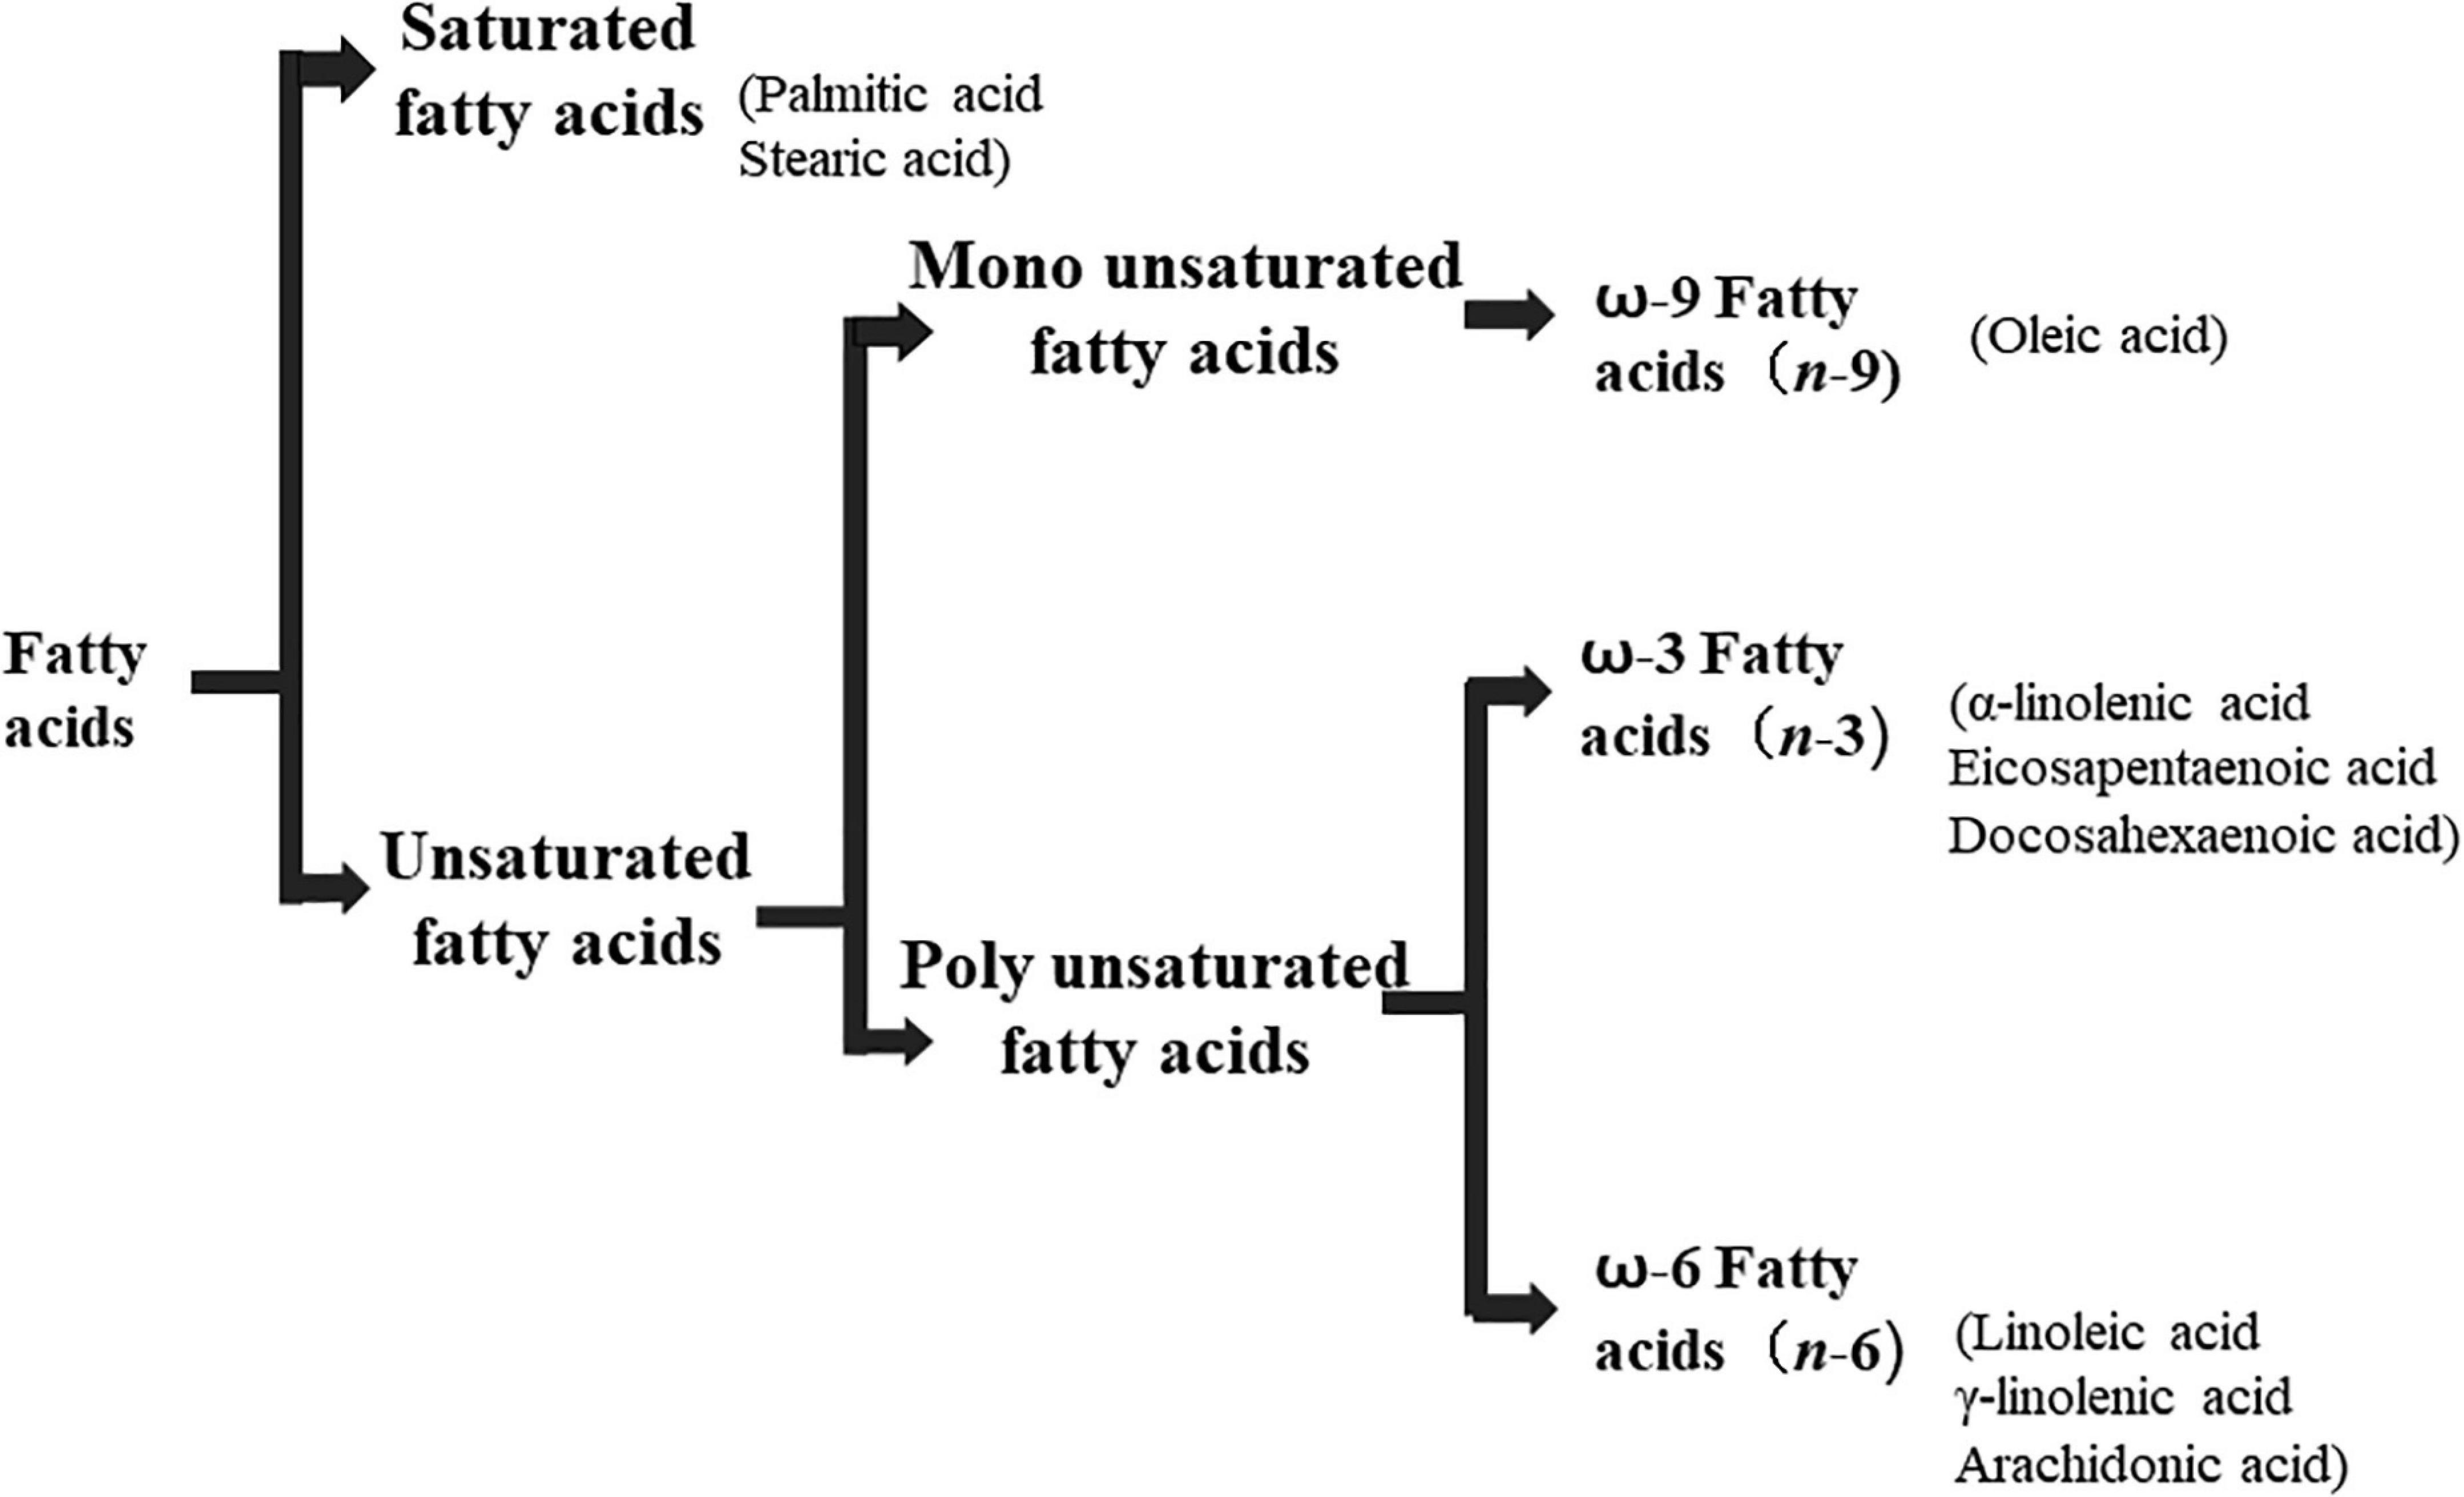 4: Fatty acids. (A) Stearic acid (saturated). (B) Elaidic acid